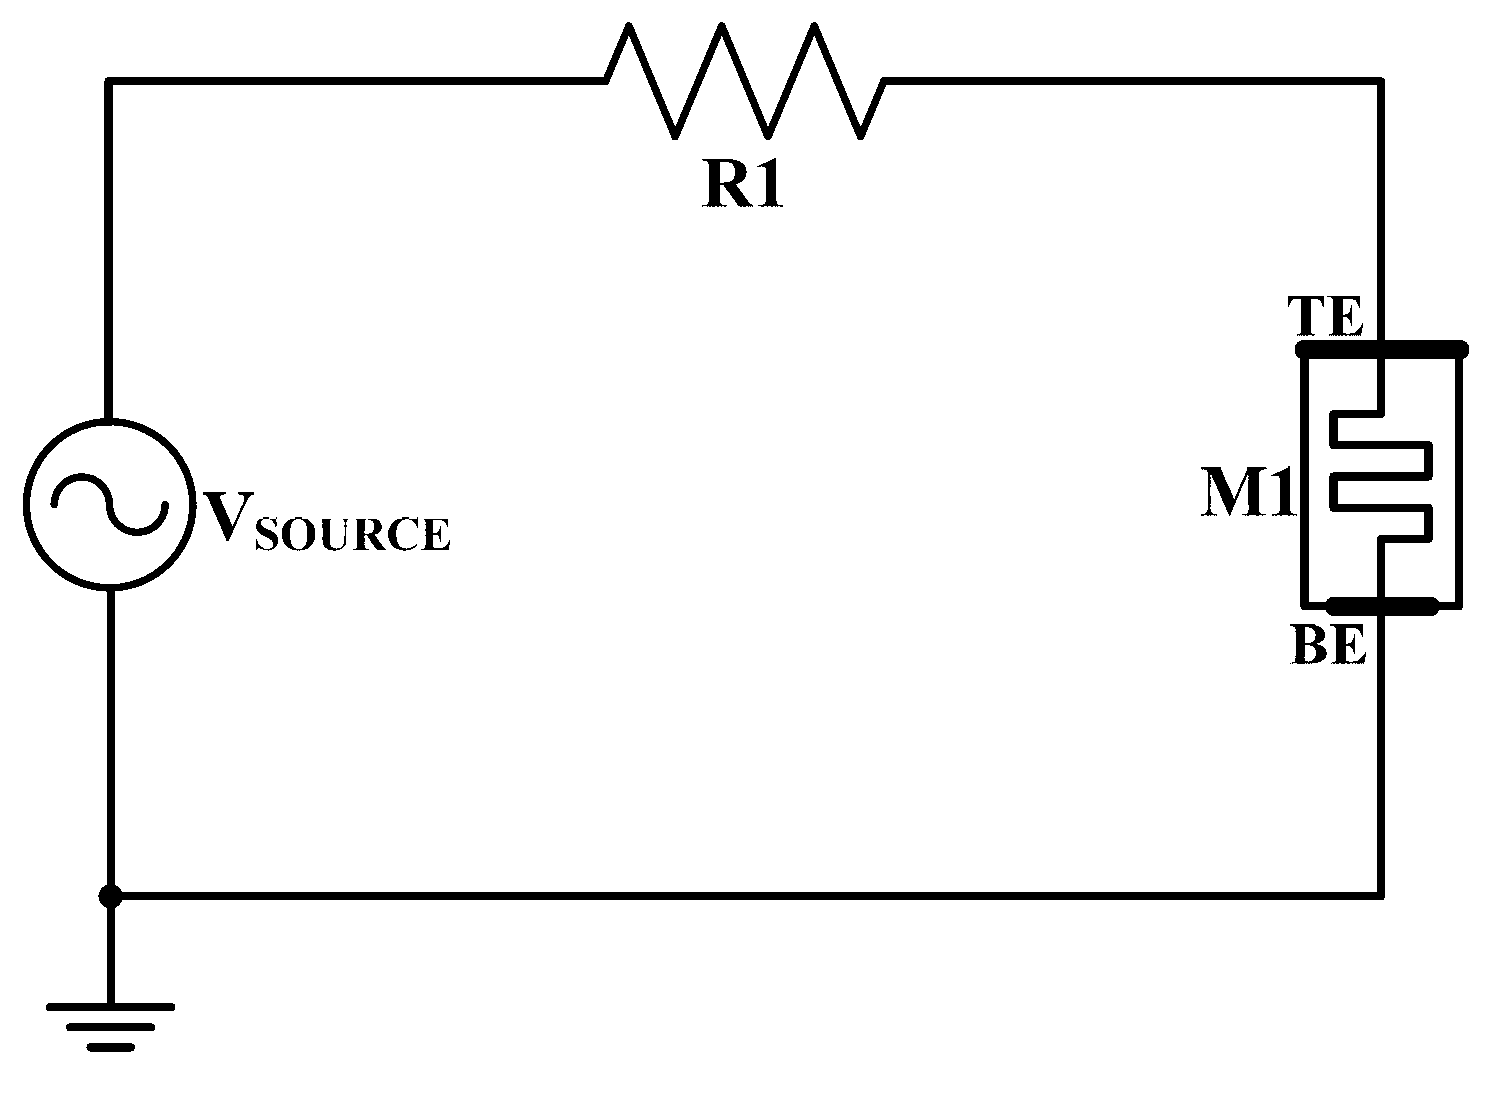 Analog-digital conversion circuit based on memristor